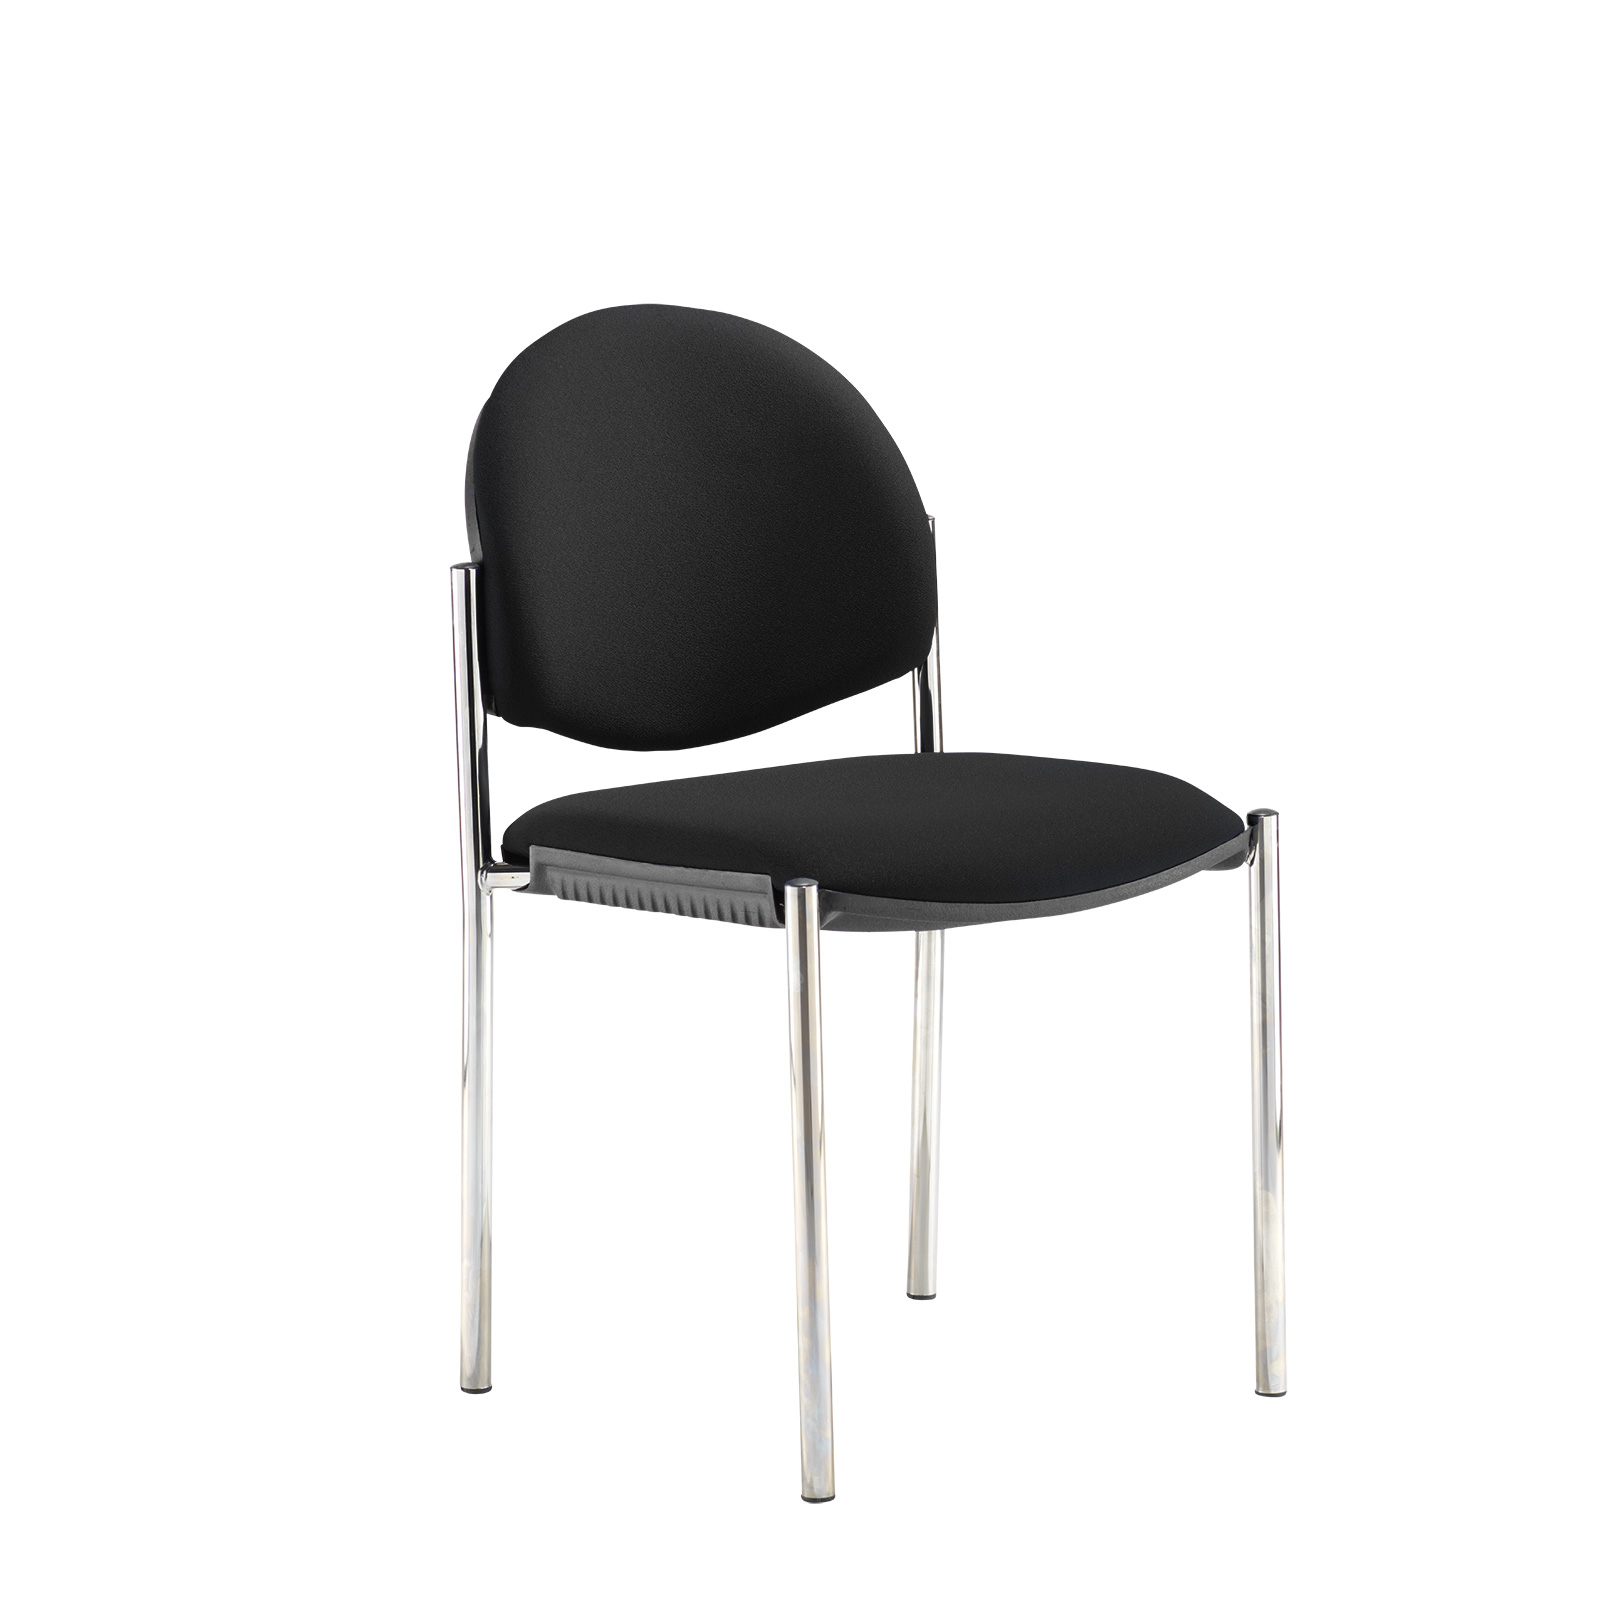 Coda multi purpose chair, no arms, black fabric